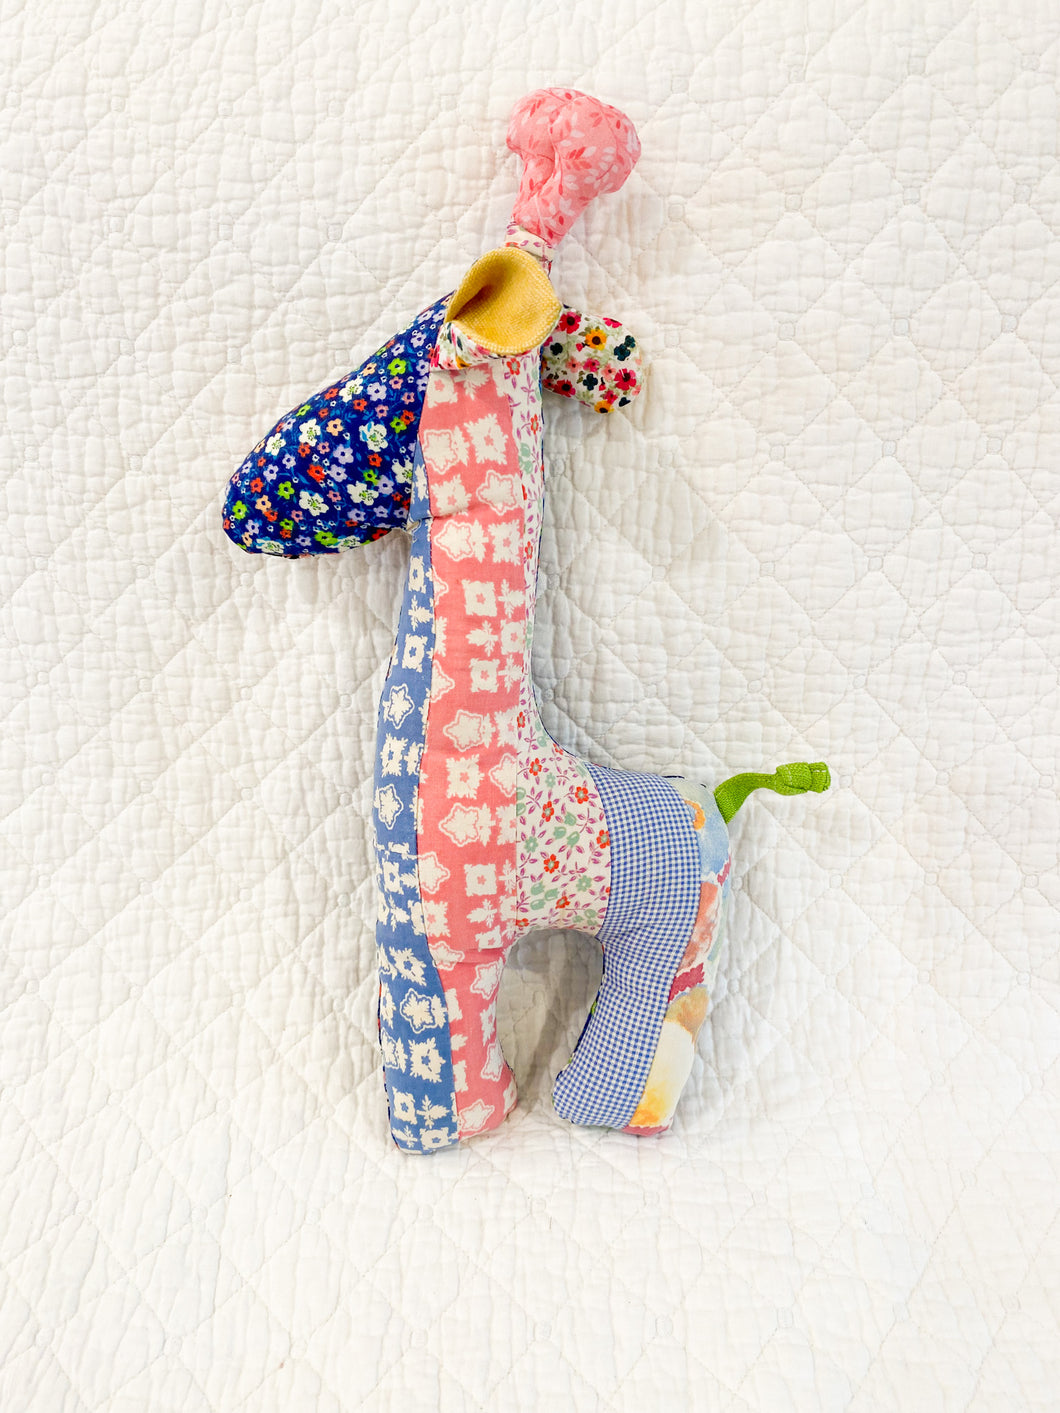 Handmade Stuffed Giraffe